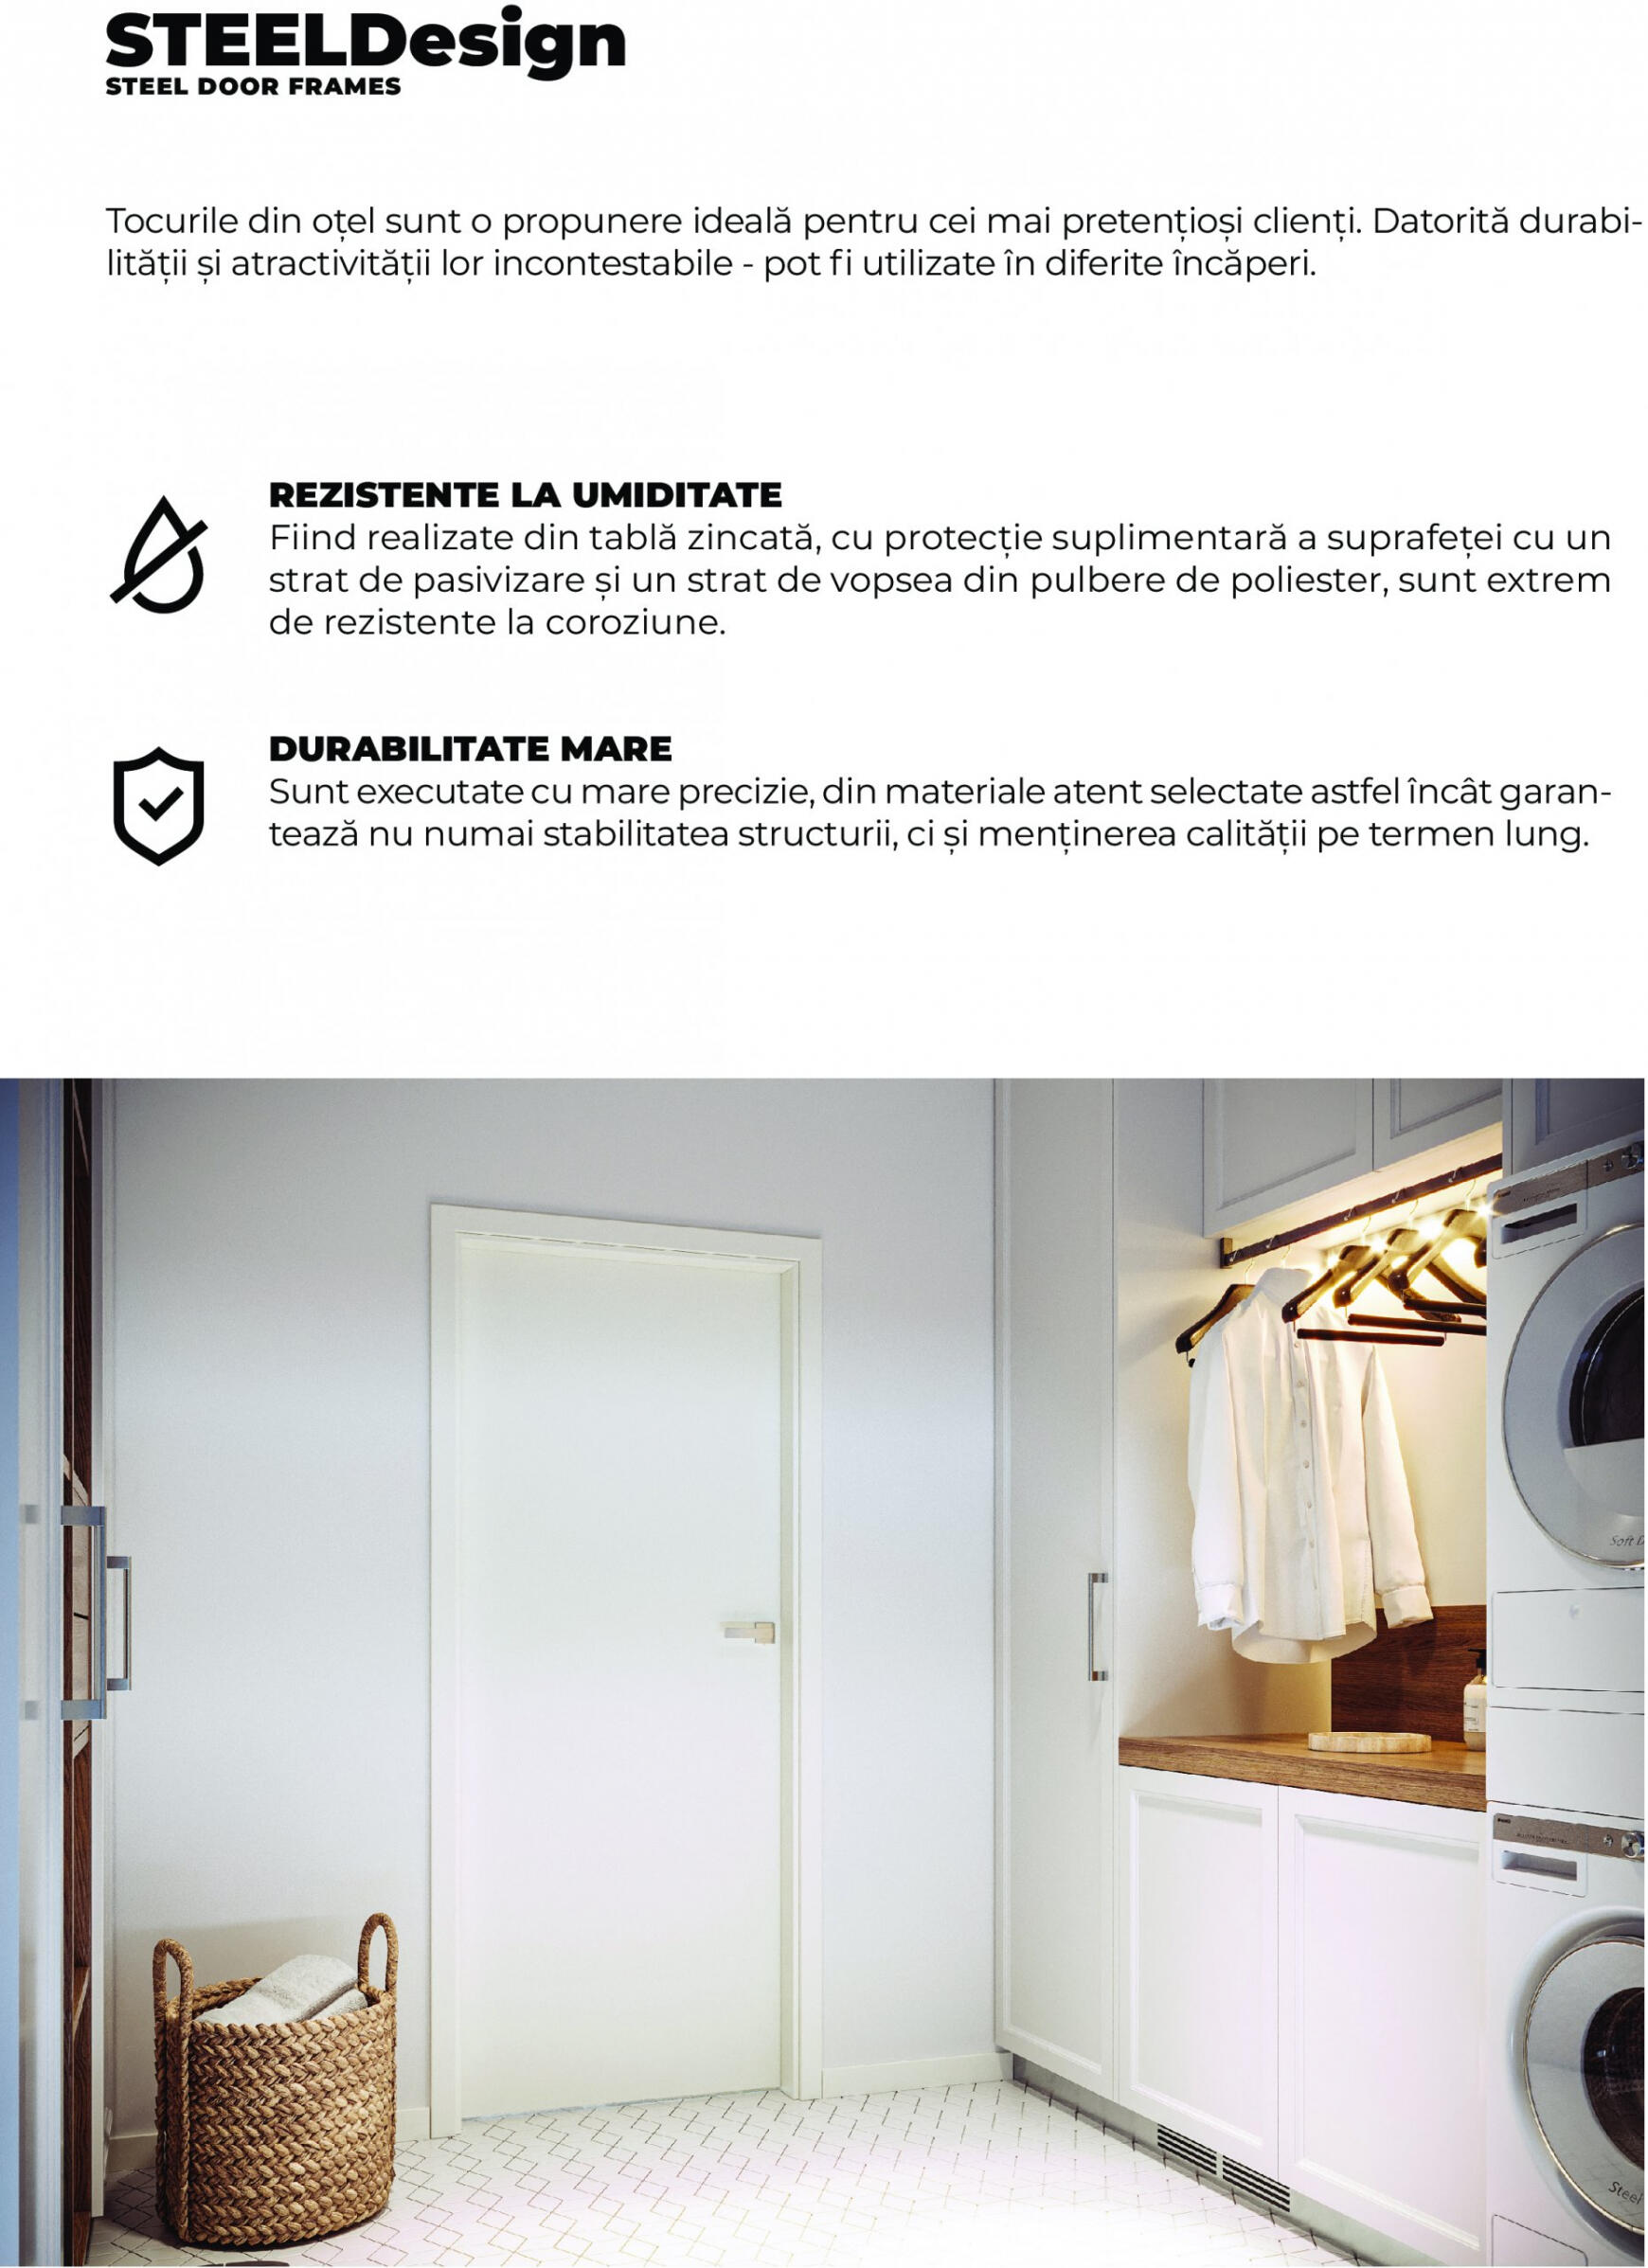 porta-doors - Porta - Pliant STEEL Design - page: 2